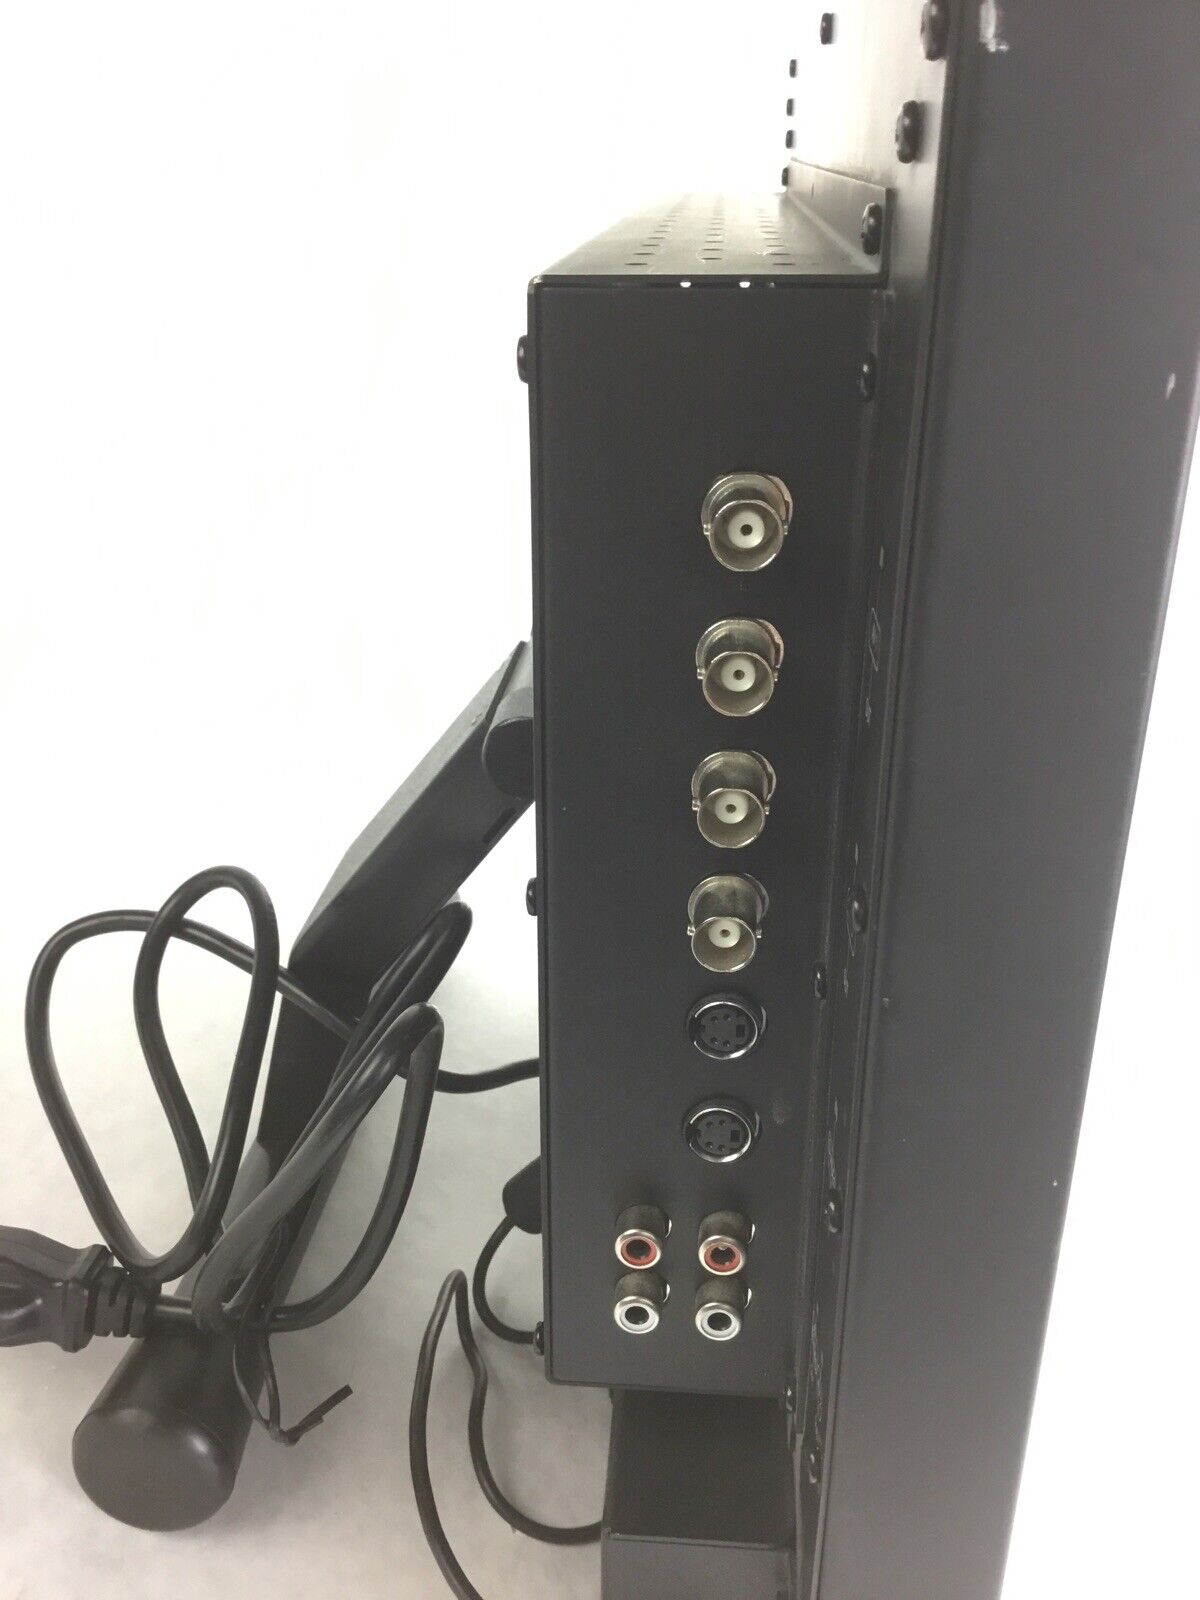 NAV 17RTC 17 Inch Premium LED Monitor w/ Built In Speakers - Grade B